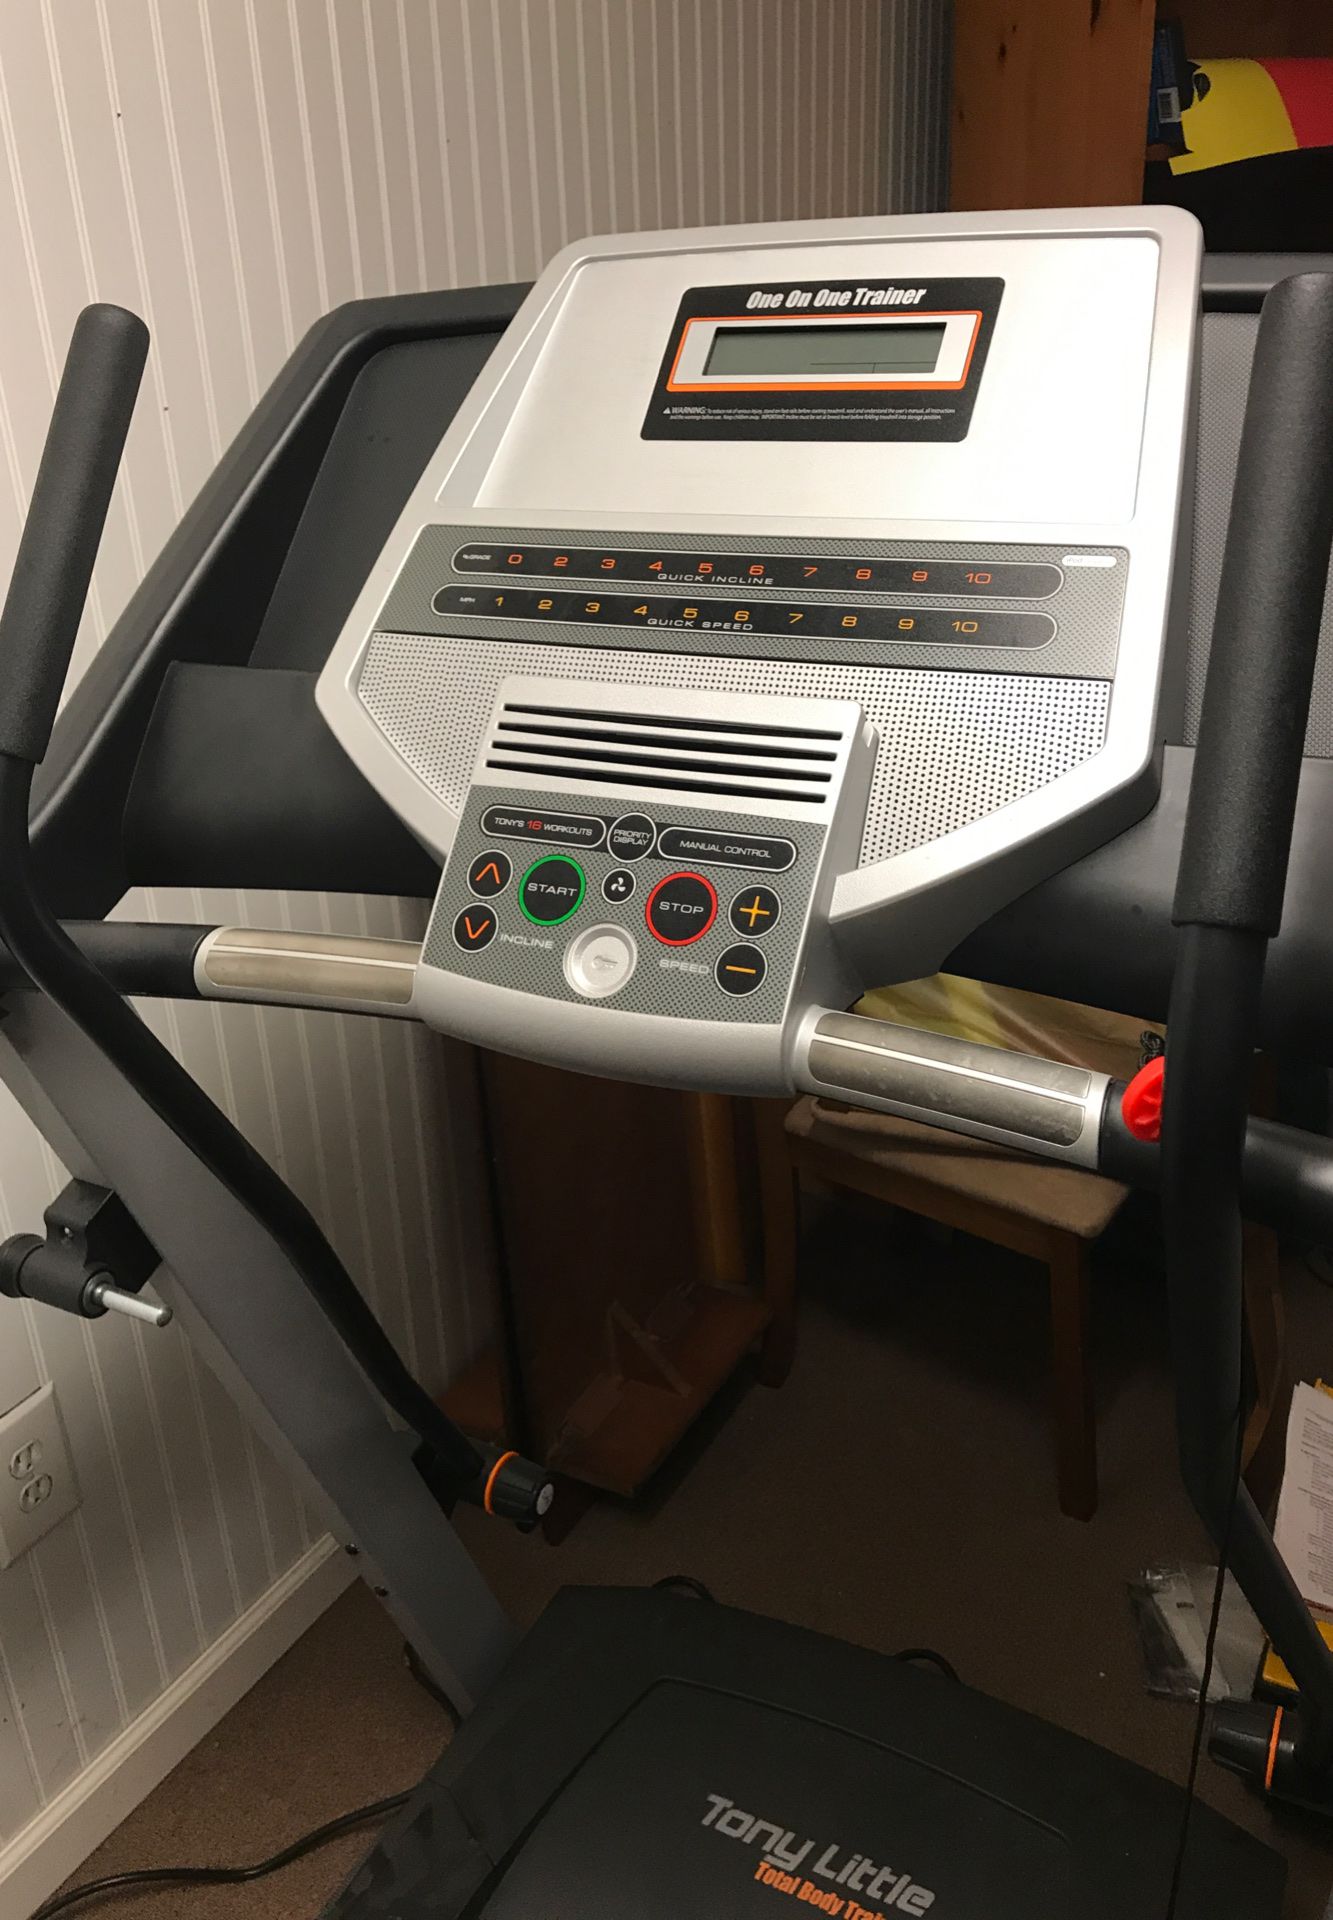 Elliptical treadmill